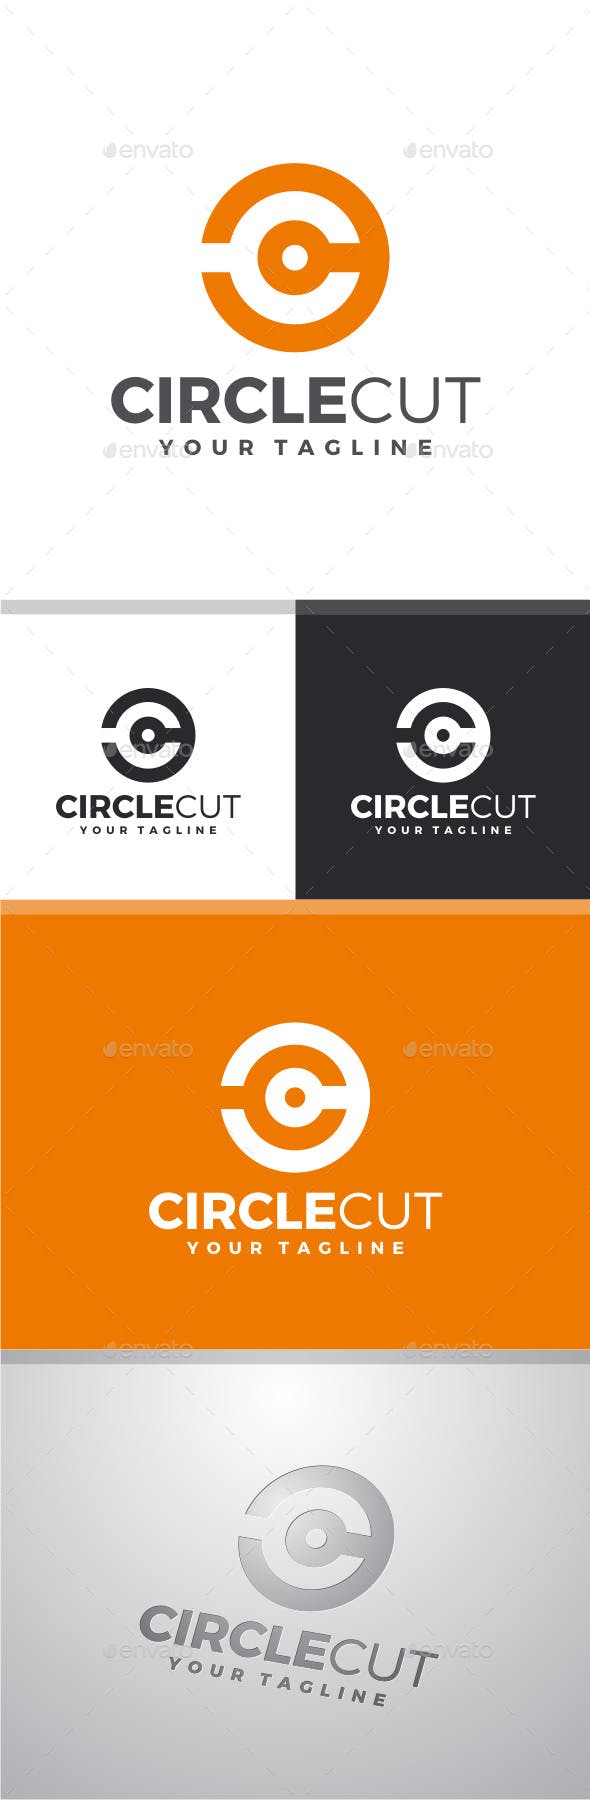 Cut Letter Logo - Circle Cut - Letter C Logo by yopie | GraphicRiver